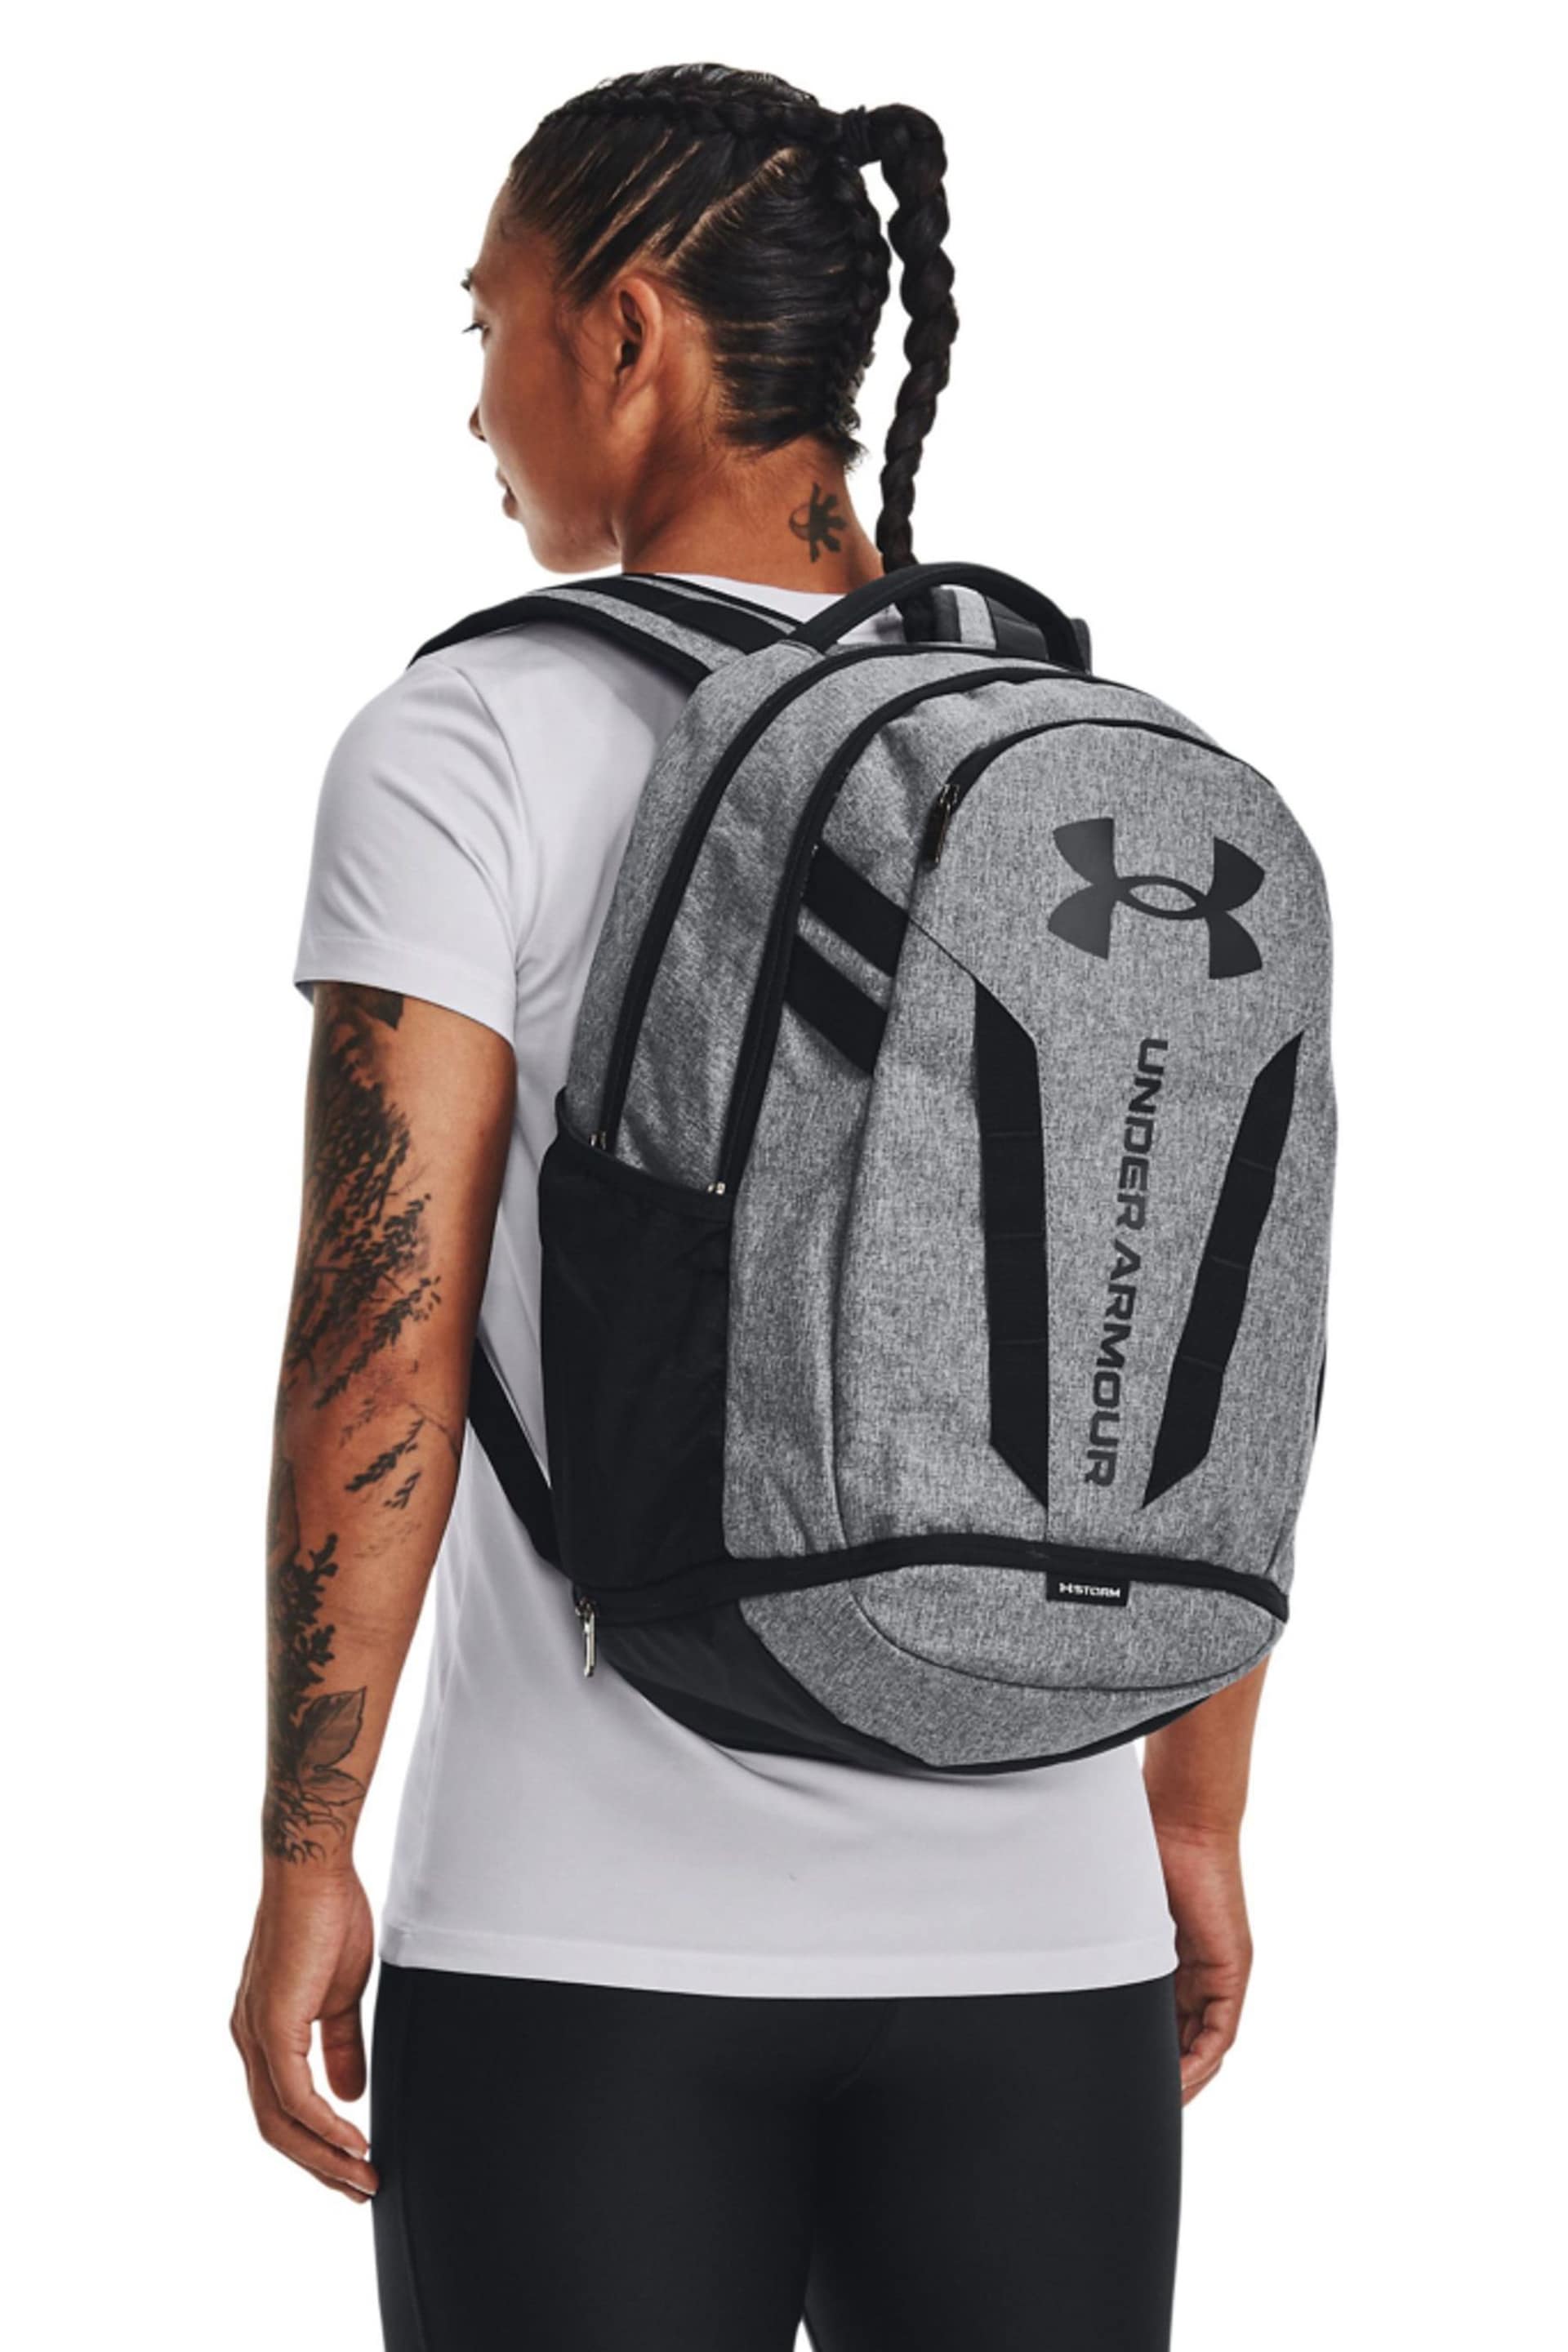 Under Armour Black/Grey Hustle 5 Backpack - Image 1 of 7